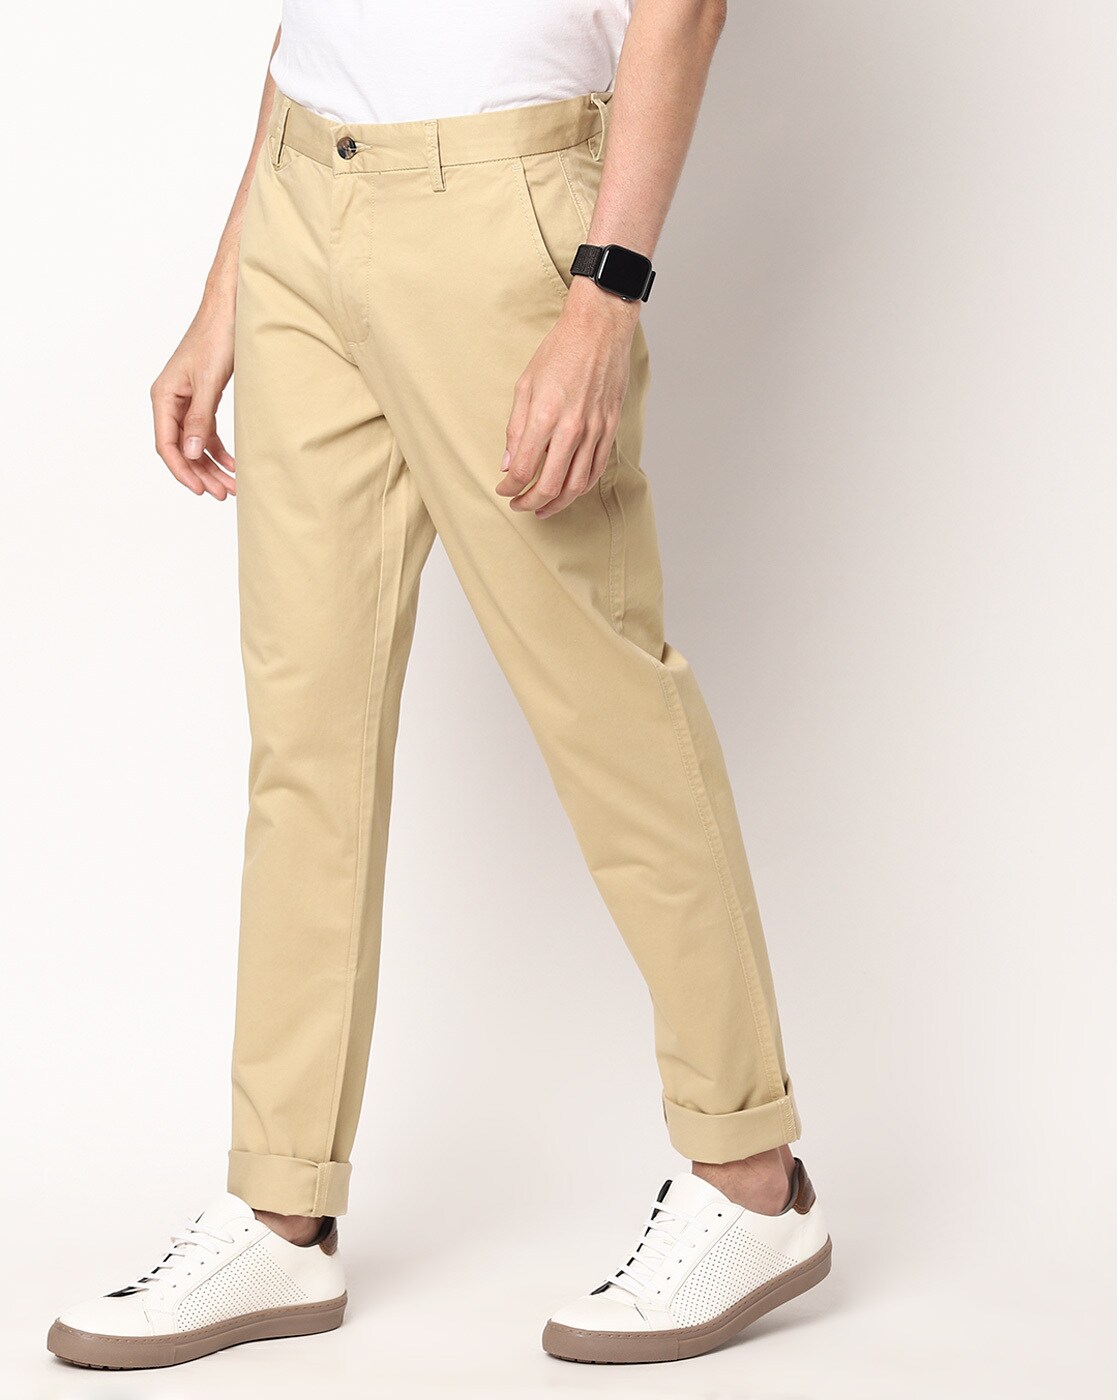 Buy khaki Trousers  Pants for Men by UNITED COLORS OF BENETTON Online   Ajiocom